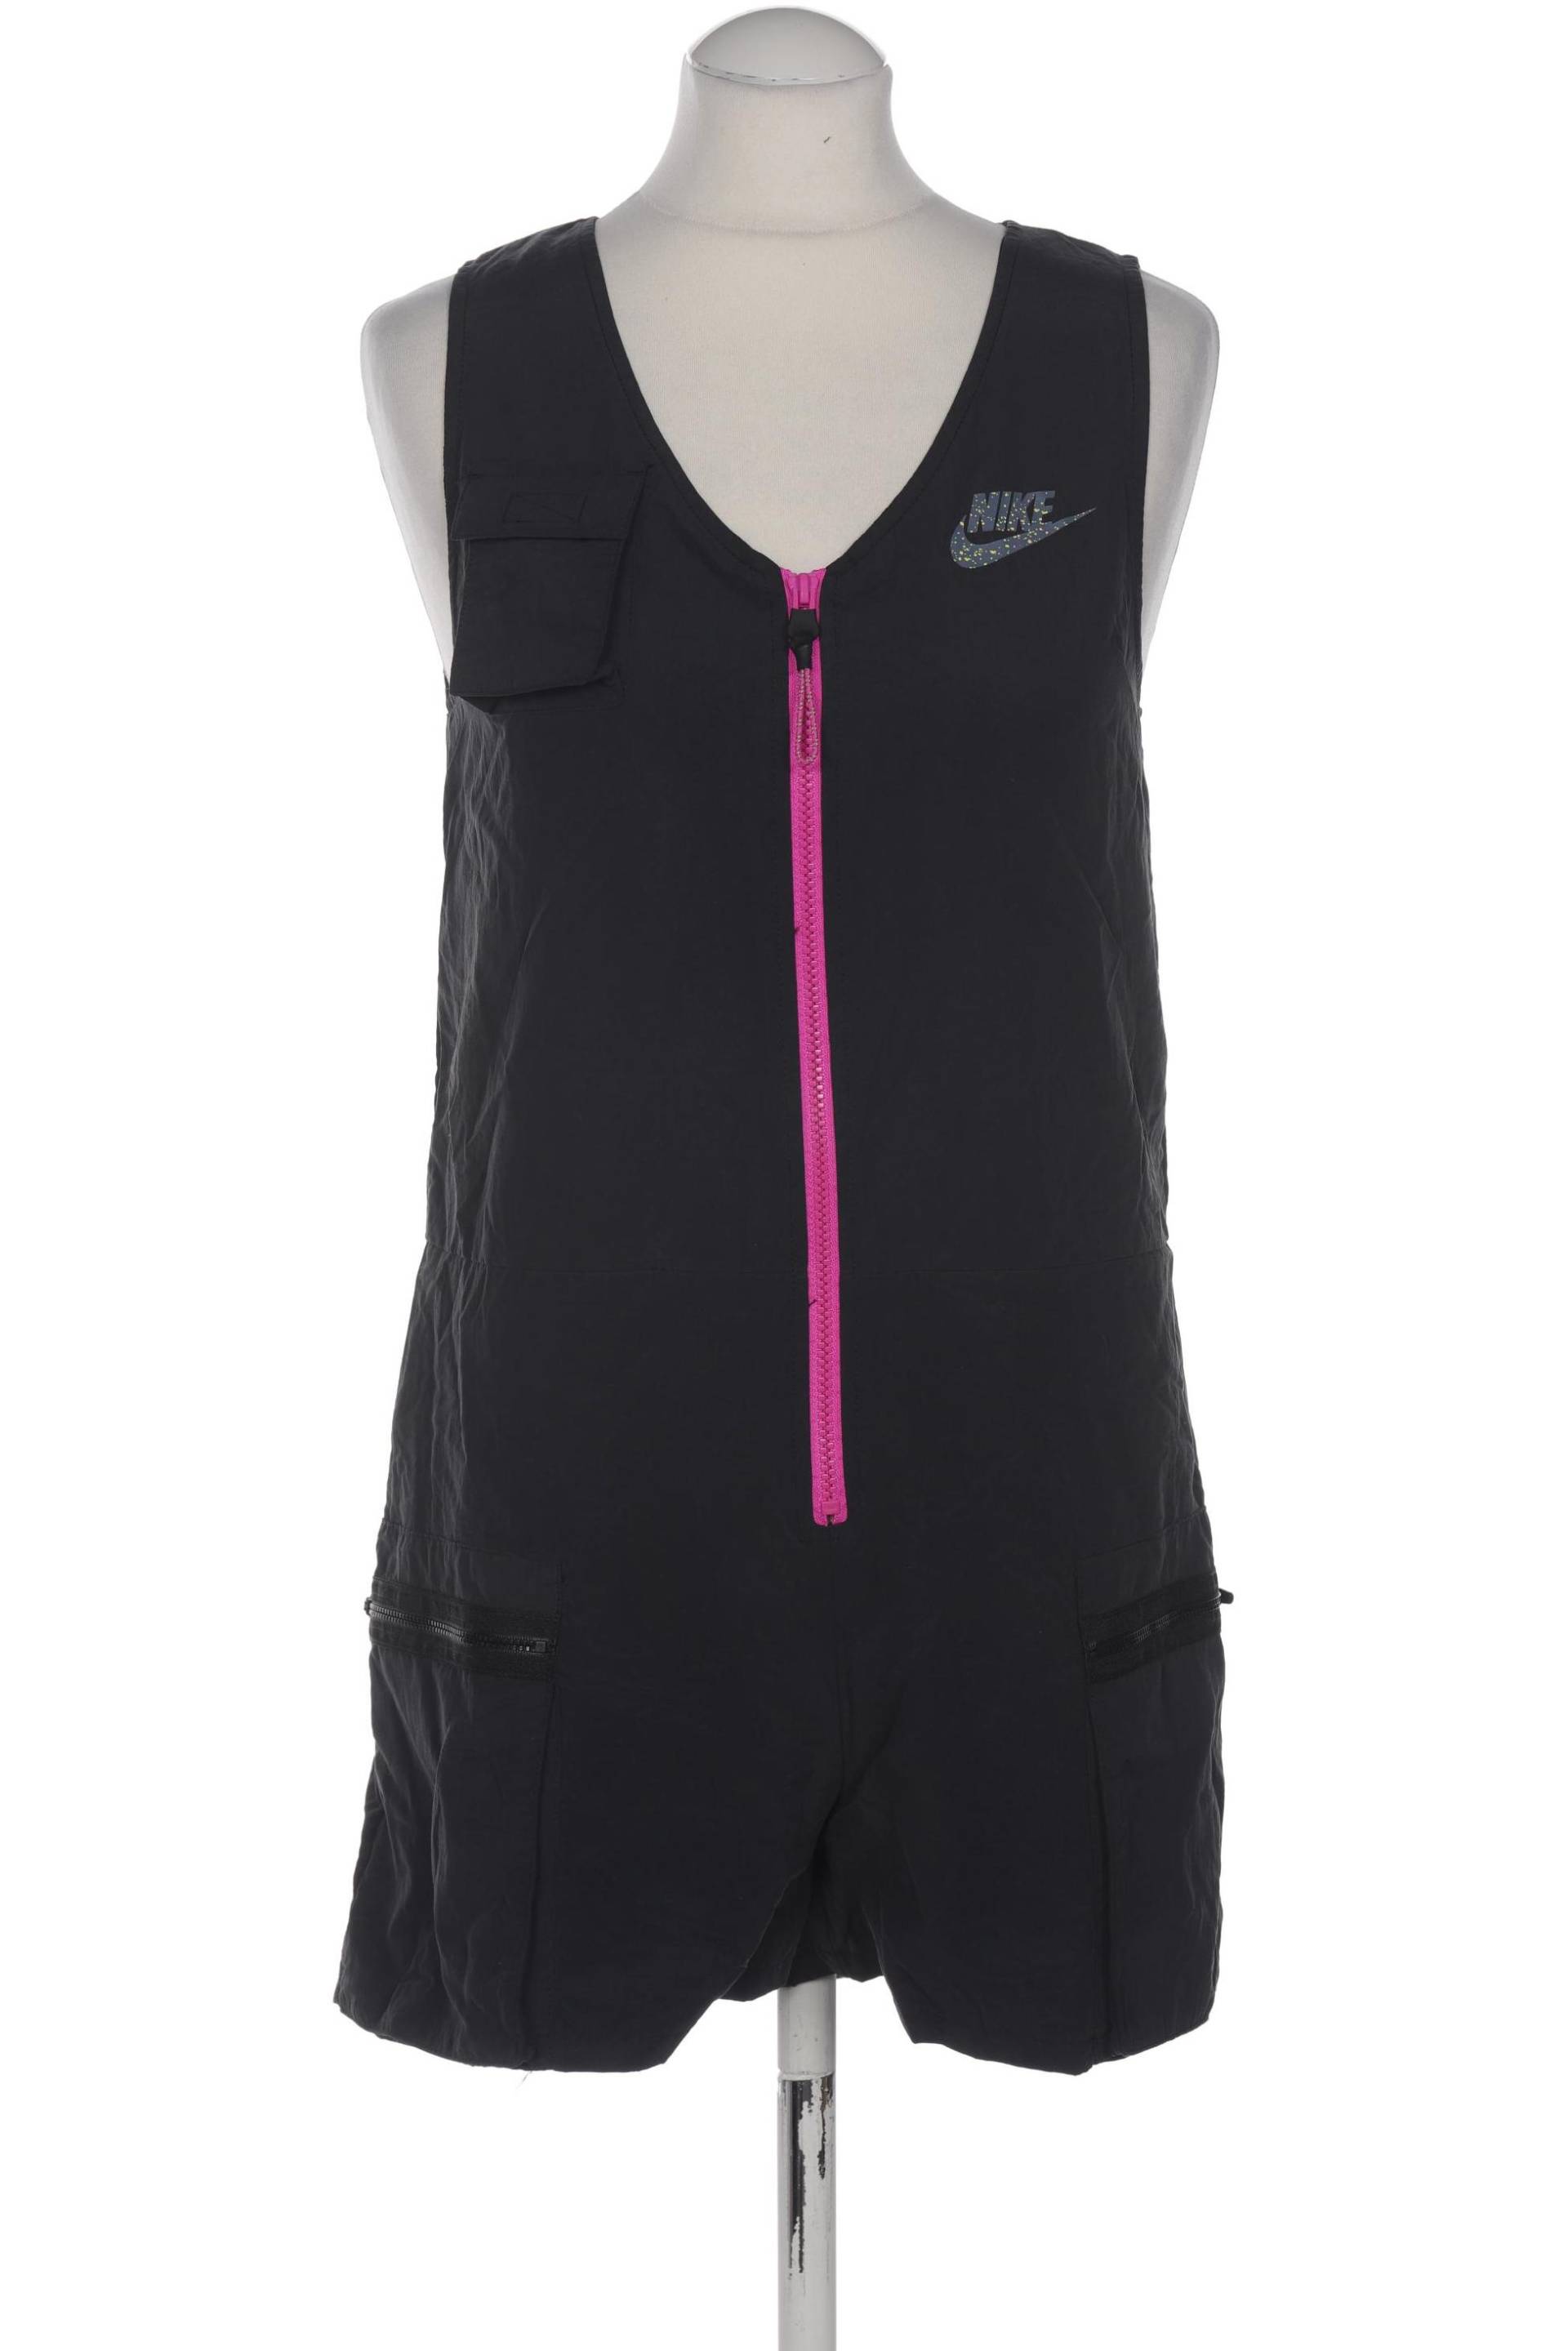 Nike Damen Jumpsuit/Overall, grau, Gr. 36 von Nike